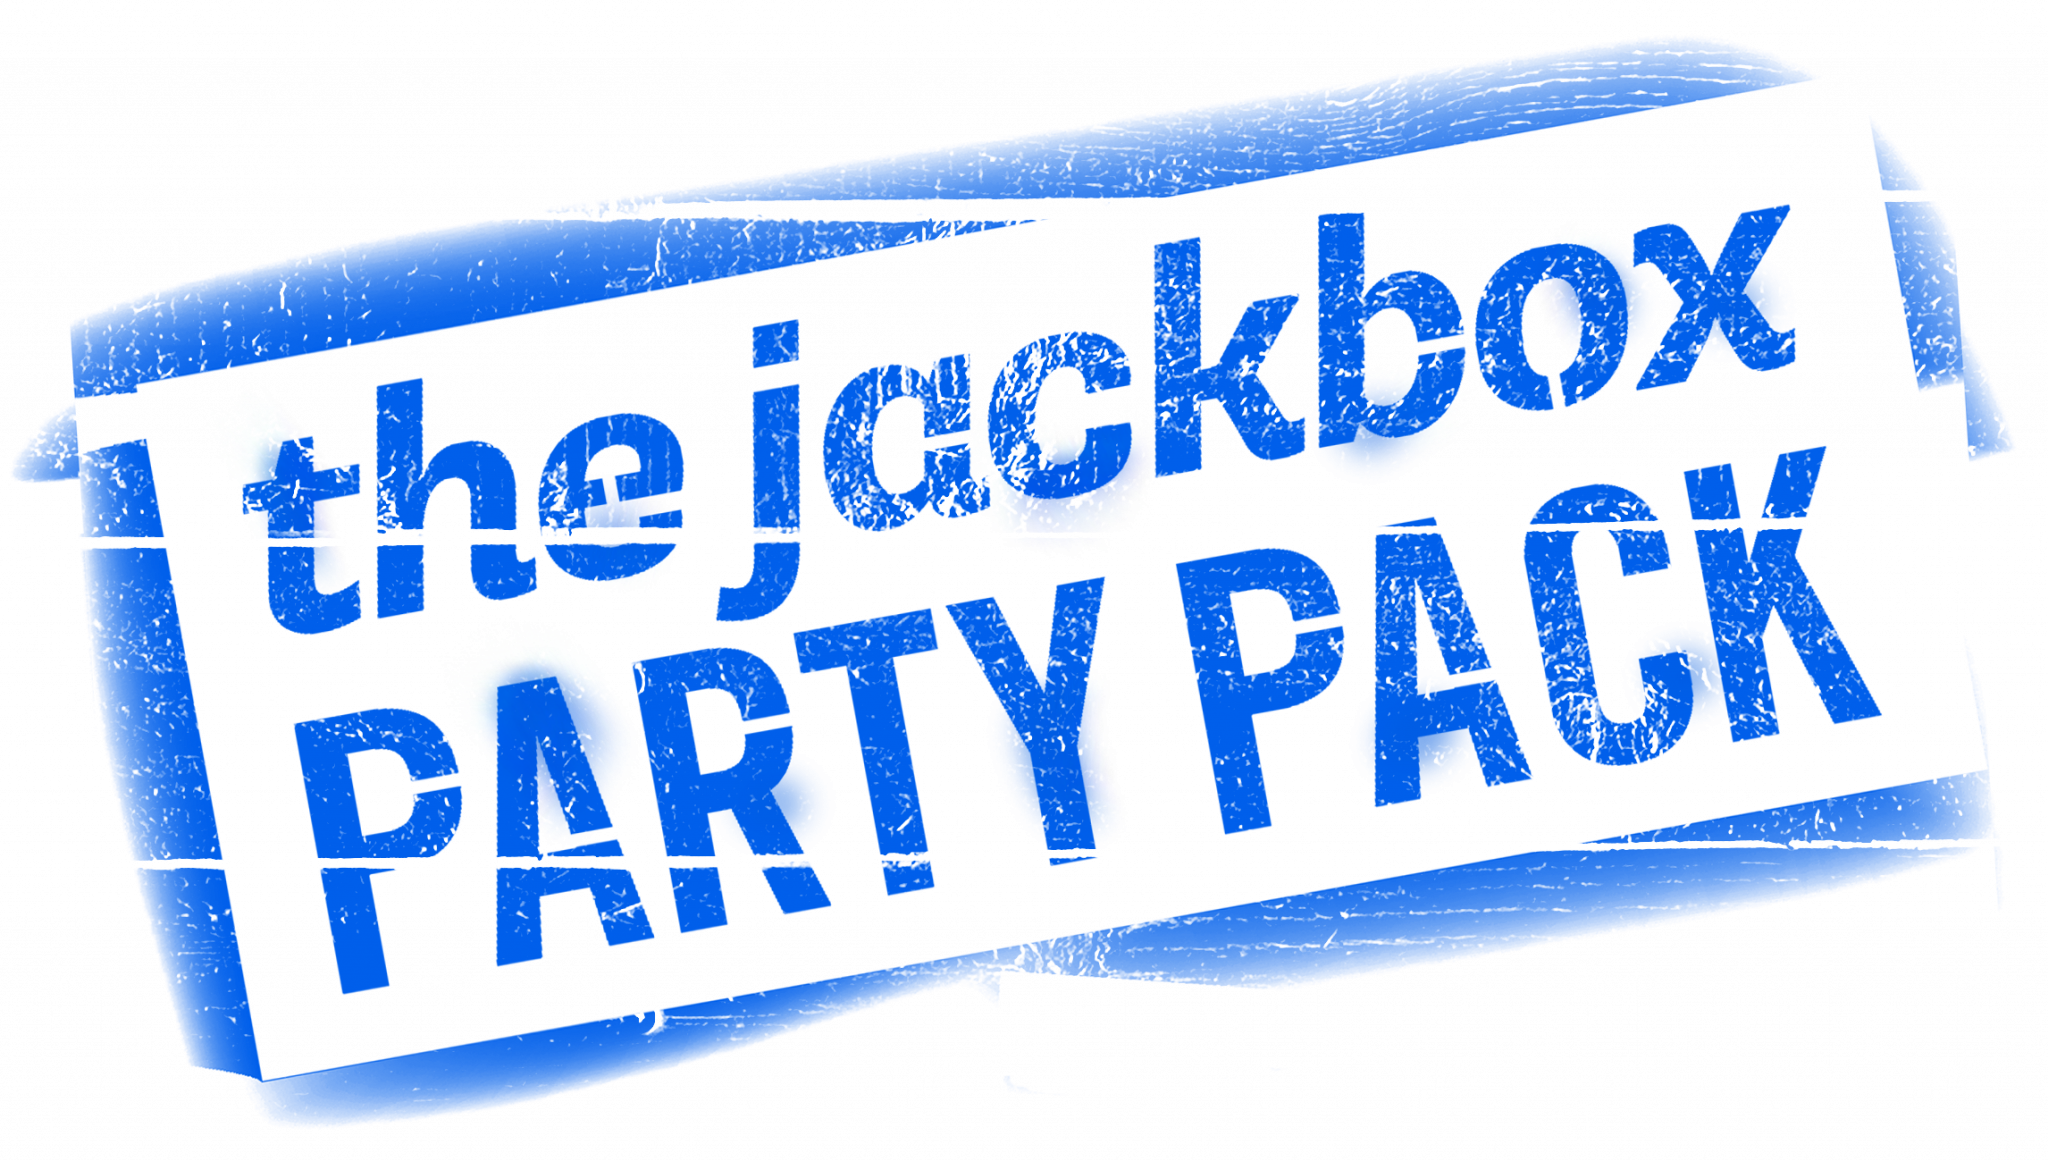 Jackbox party game. Jackbox. Jackbox игра. The Jackbox Party Pack. Jackbox логотип.